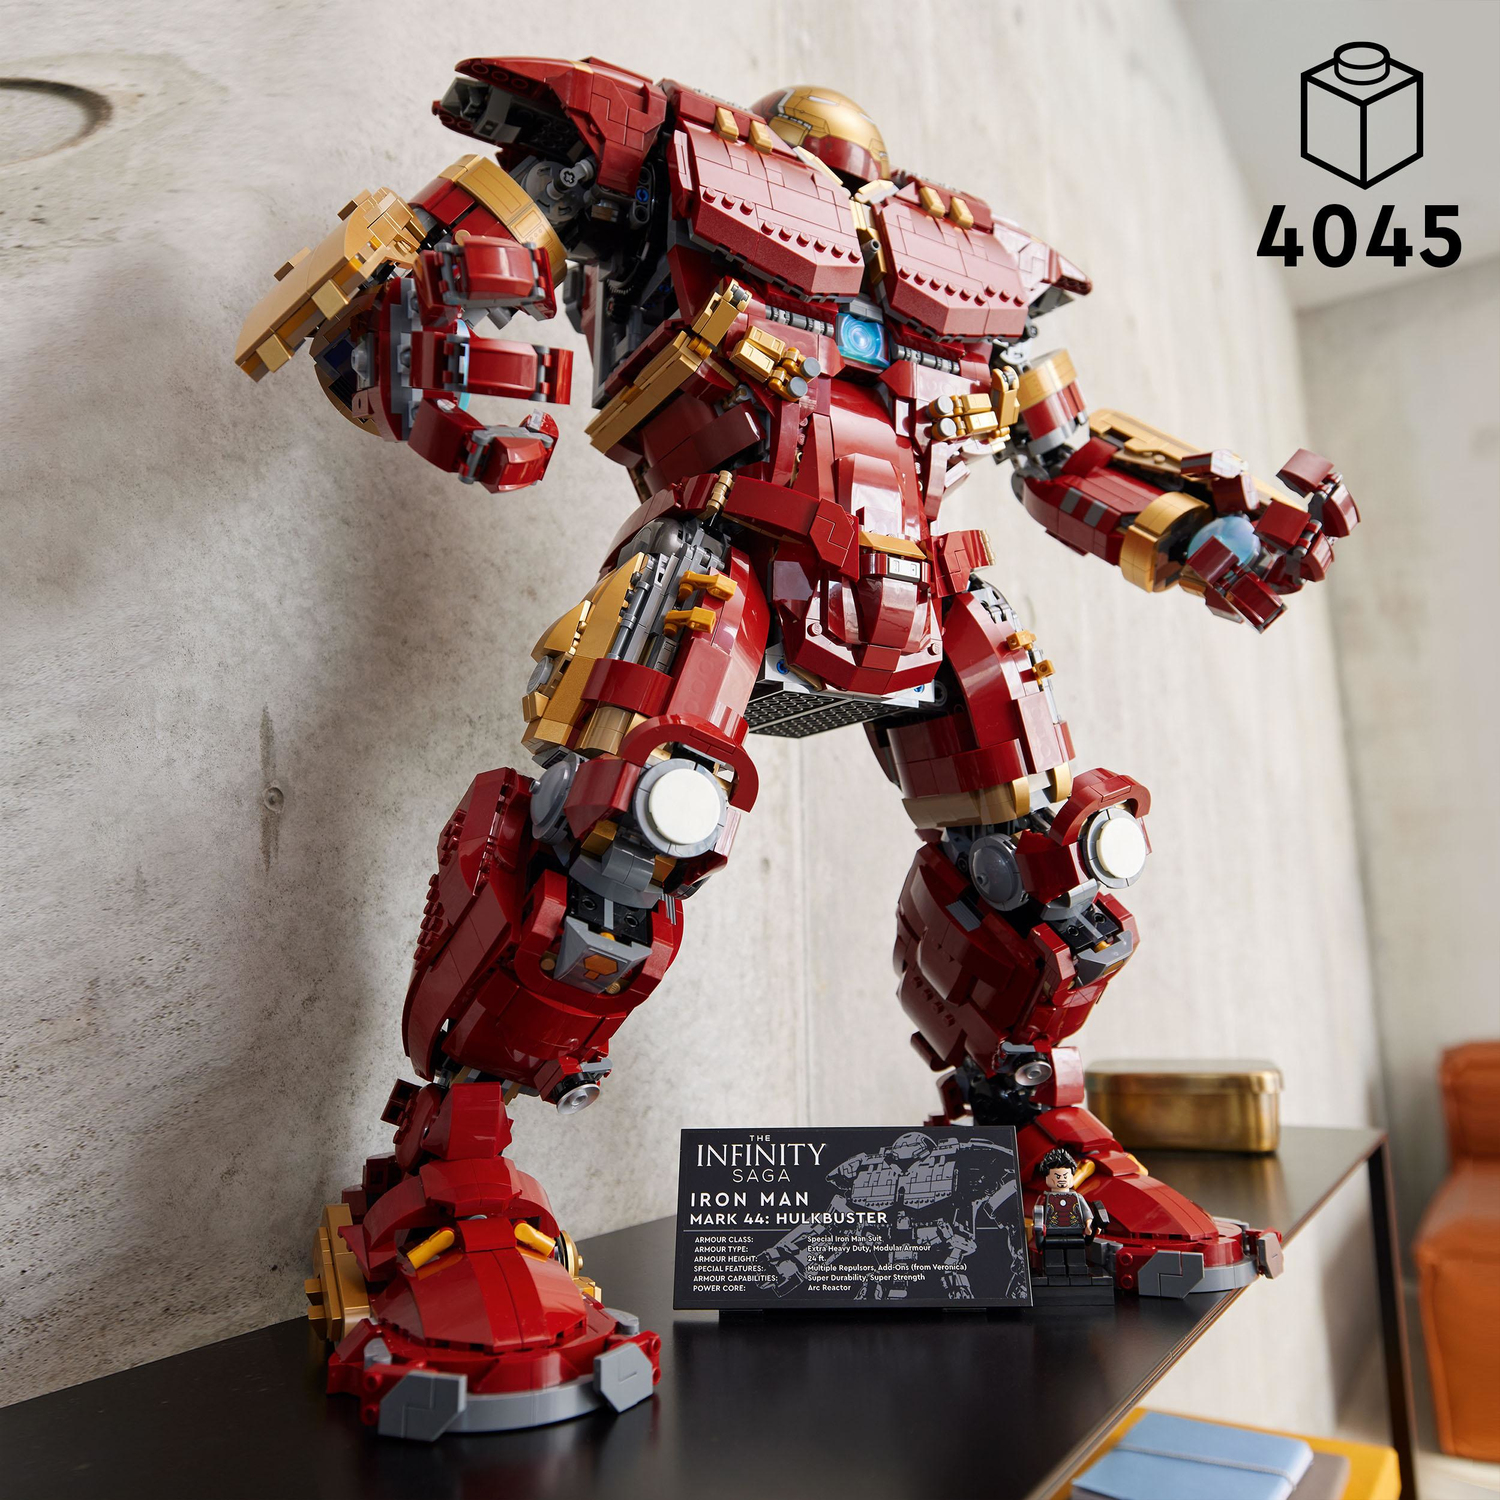 2023 Avenger Iron Man Hulkbuster Armor Joints Movable Mark Action Figure  Toy | eBay